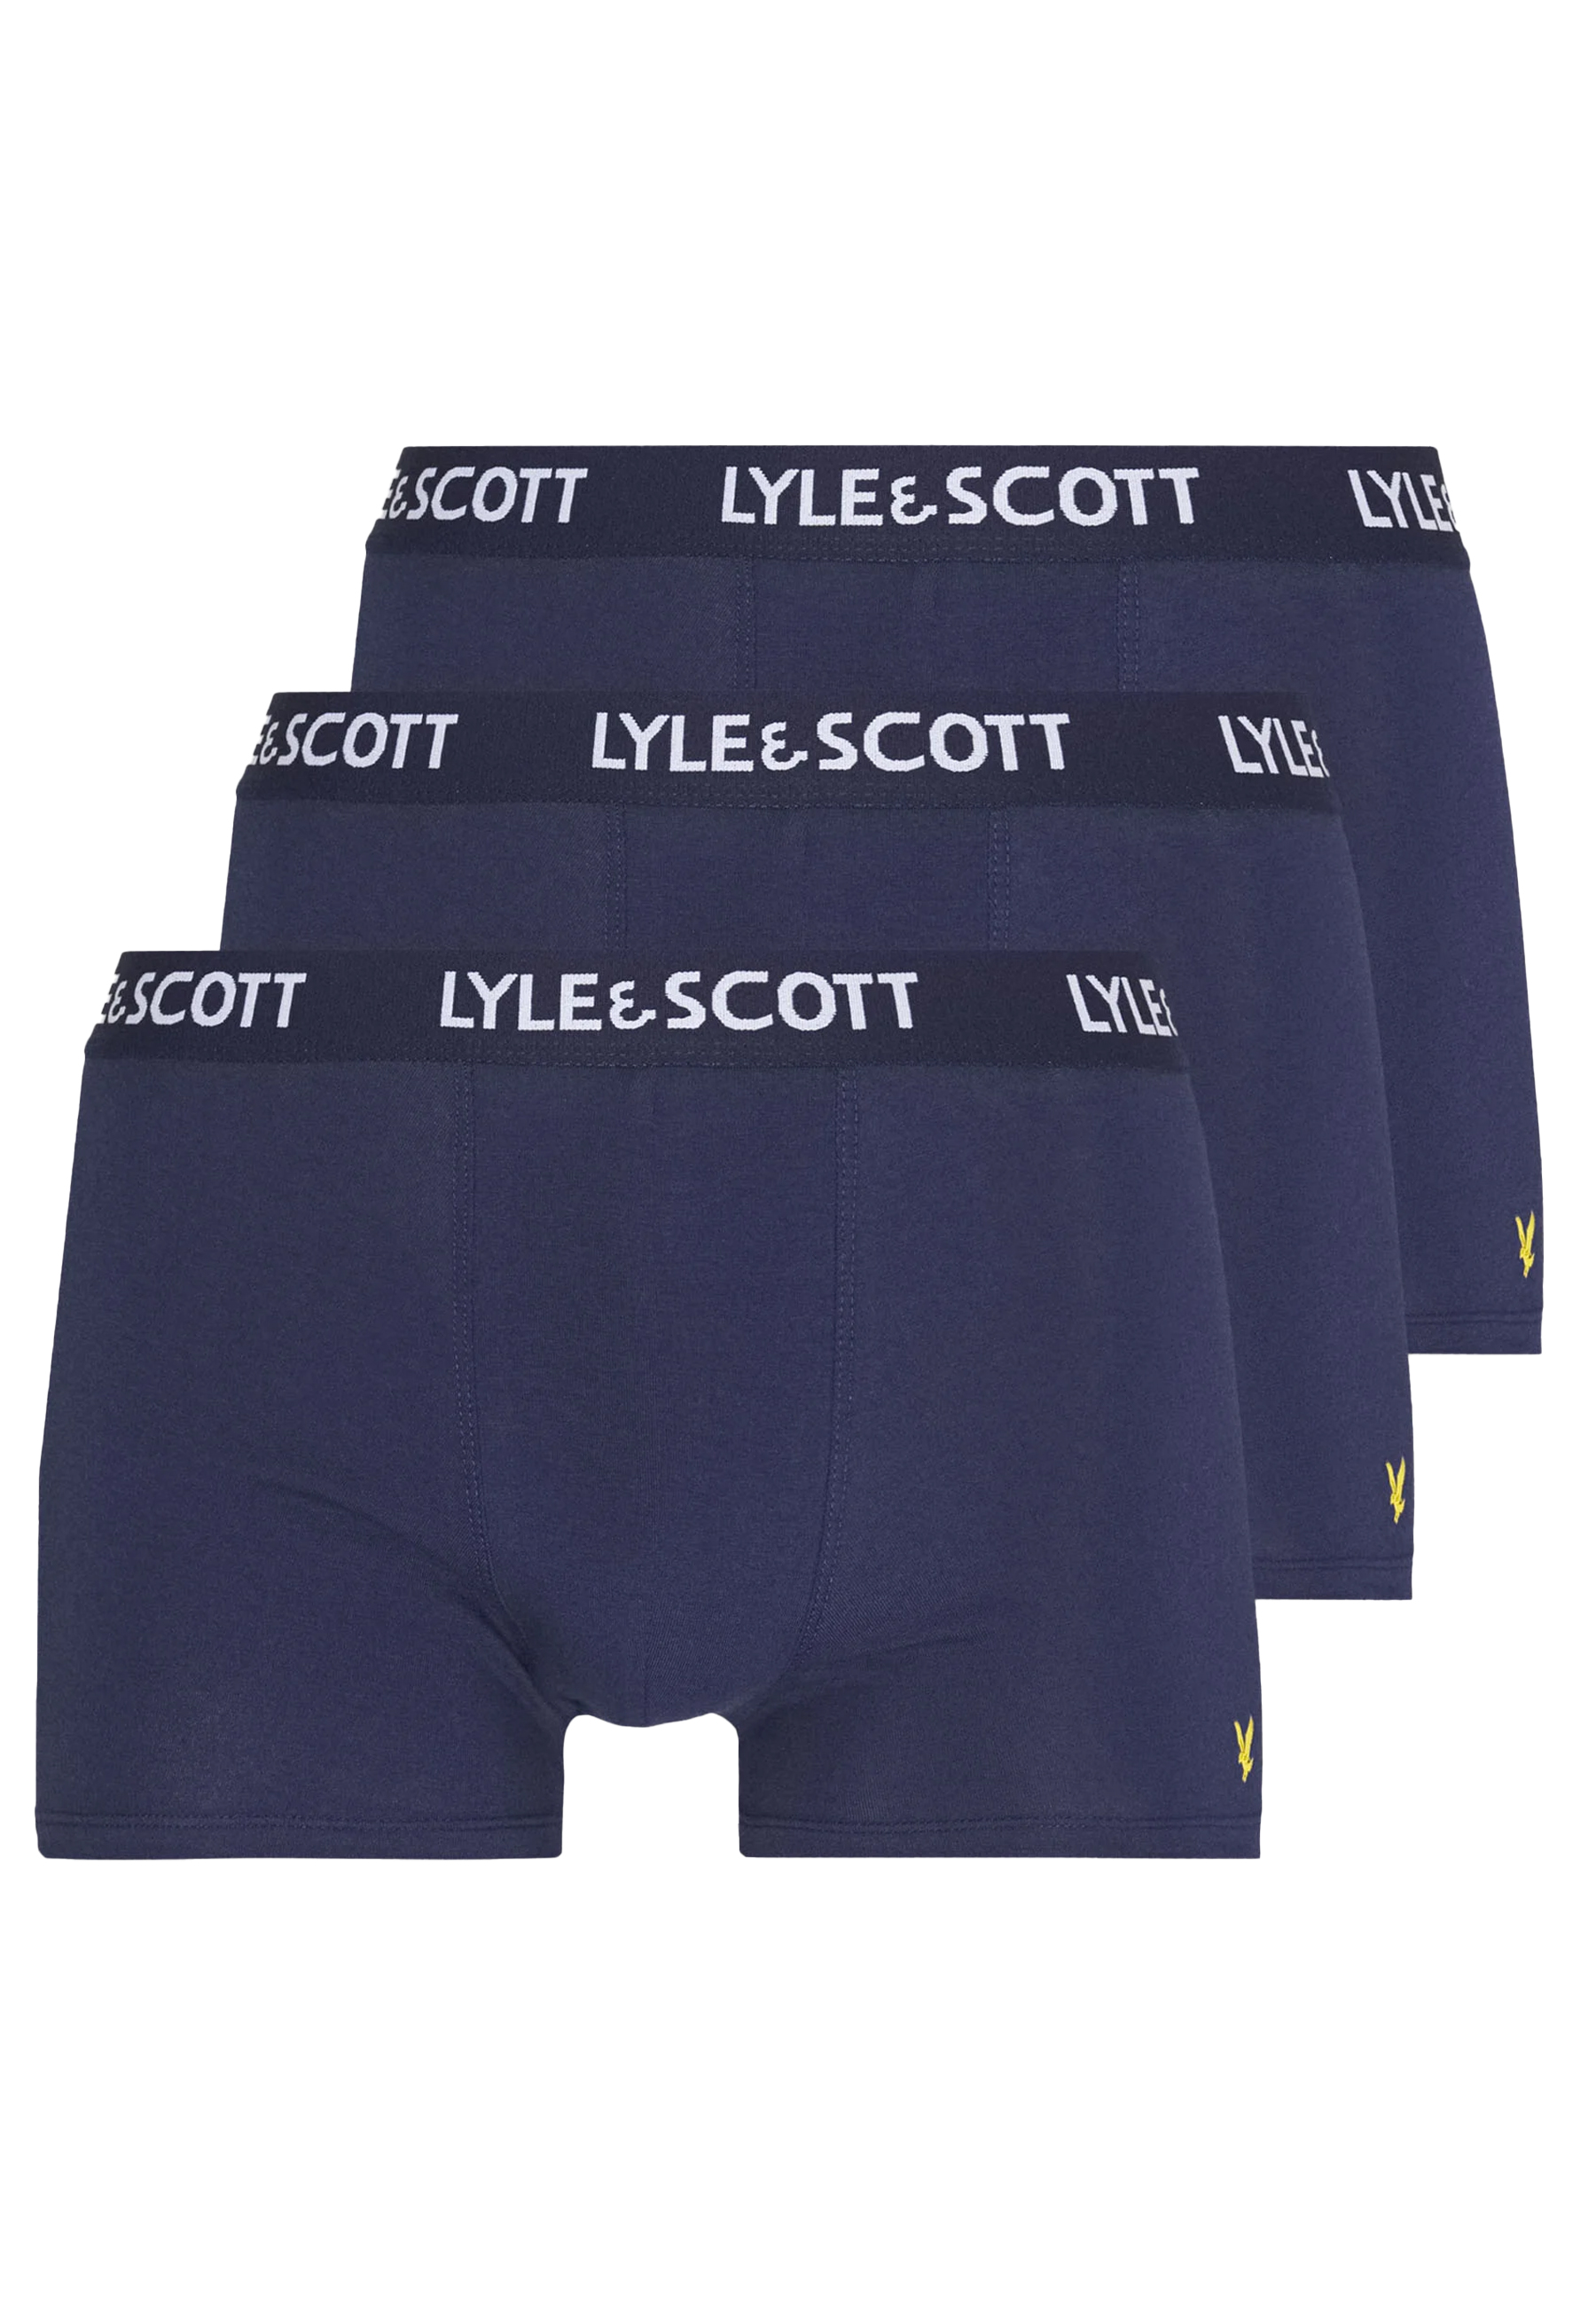 Lyle & Scott boxershorts donkerblauw Heren maat M